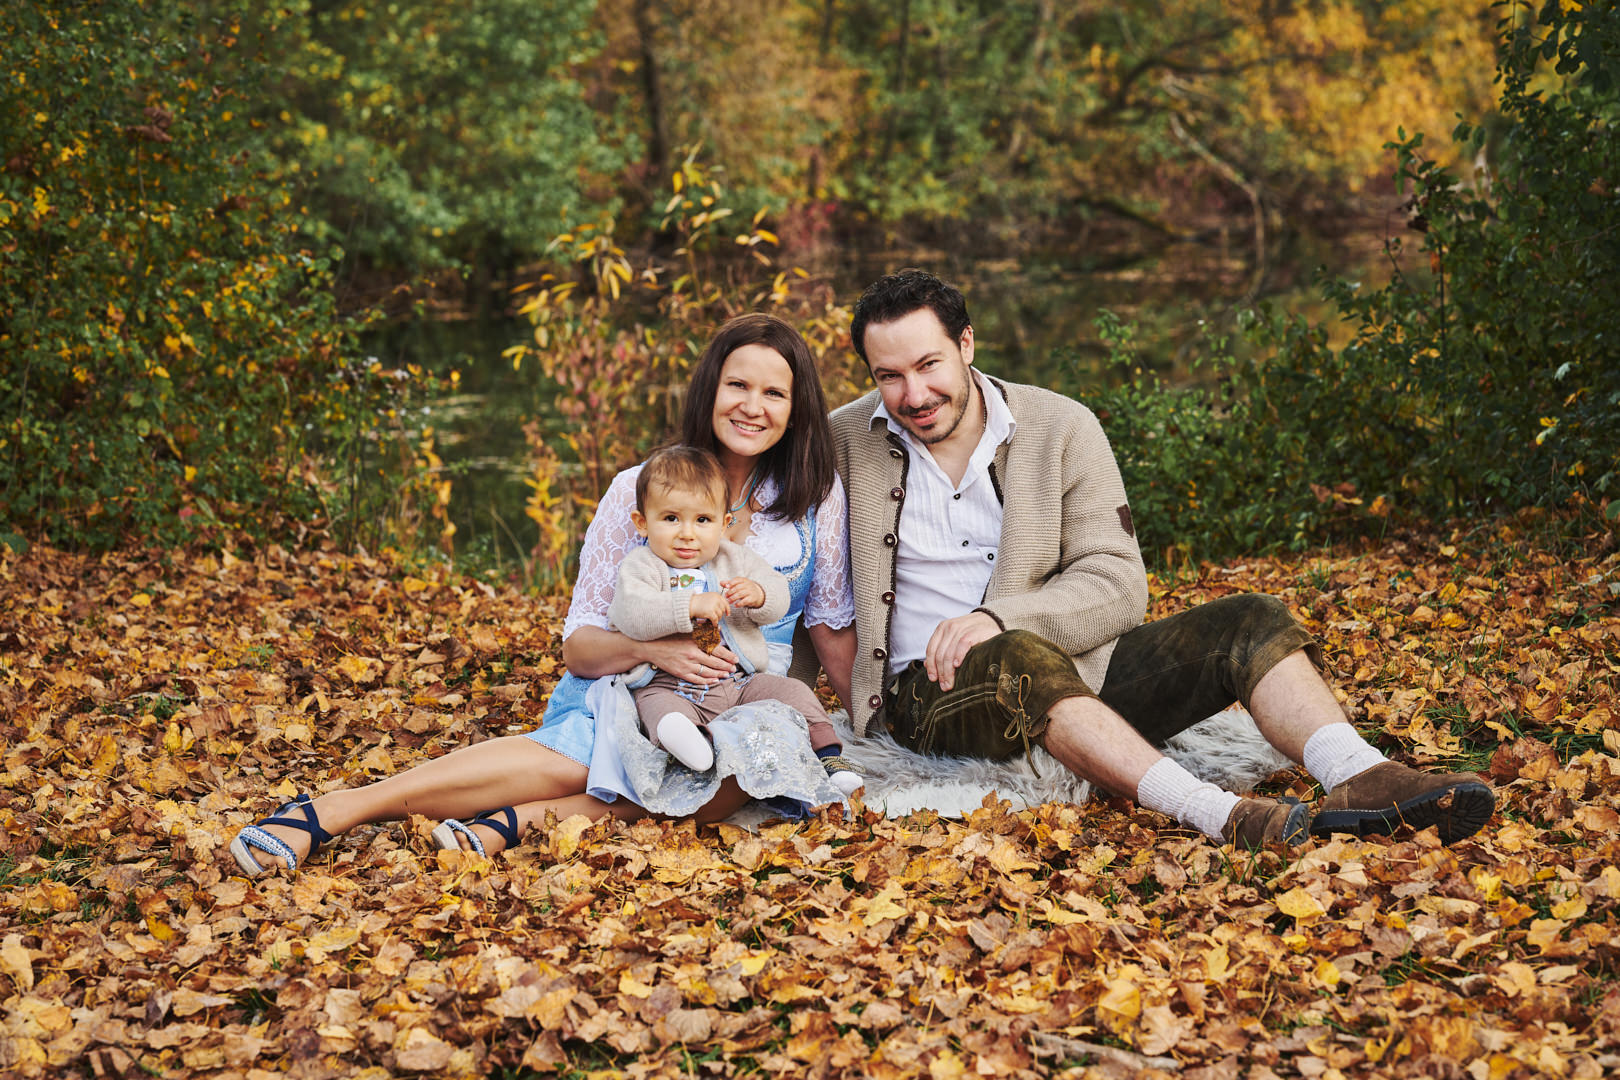 Familienfotografie Familienshooting outdoor Herbstshooting Mandy Limbach Fotografie